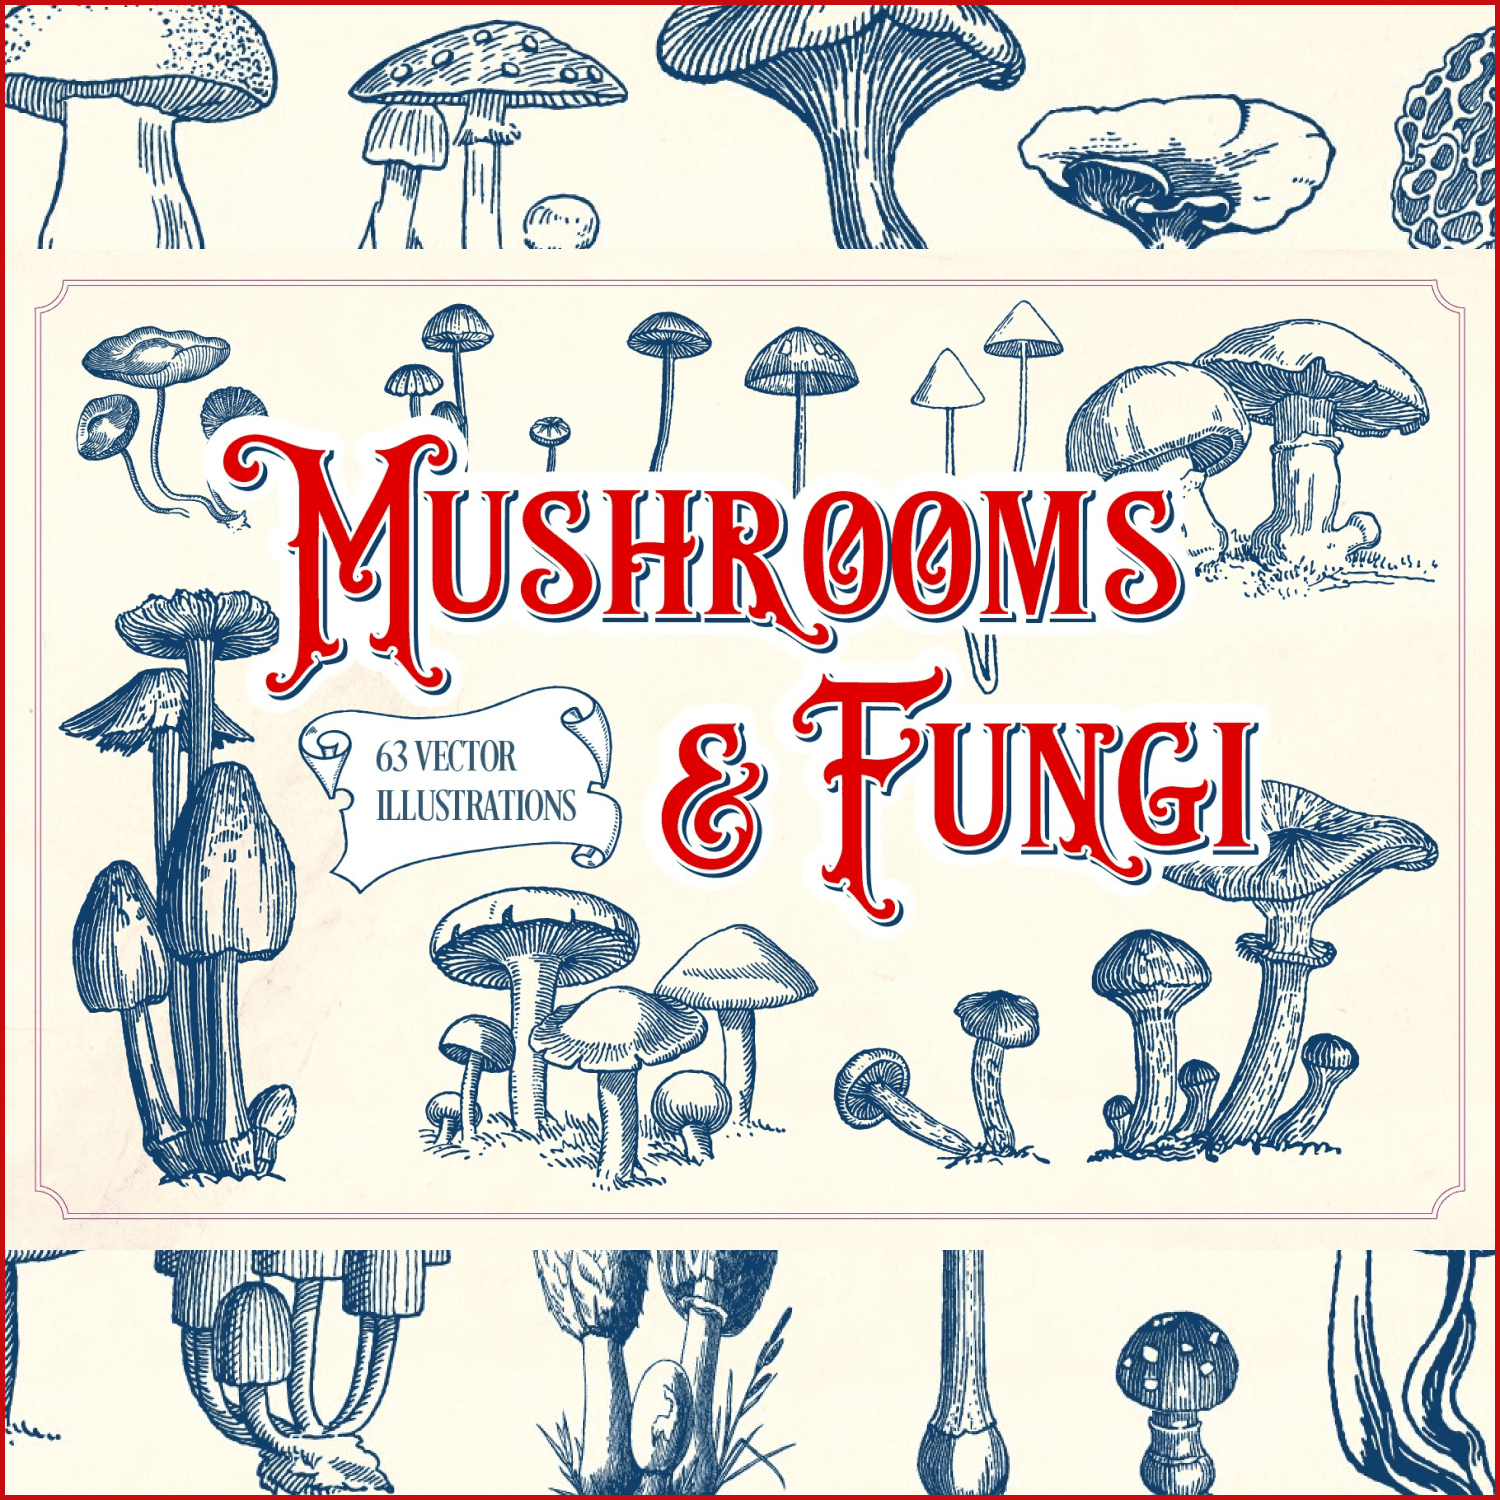 Vintage mushrooms - main image preview.